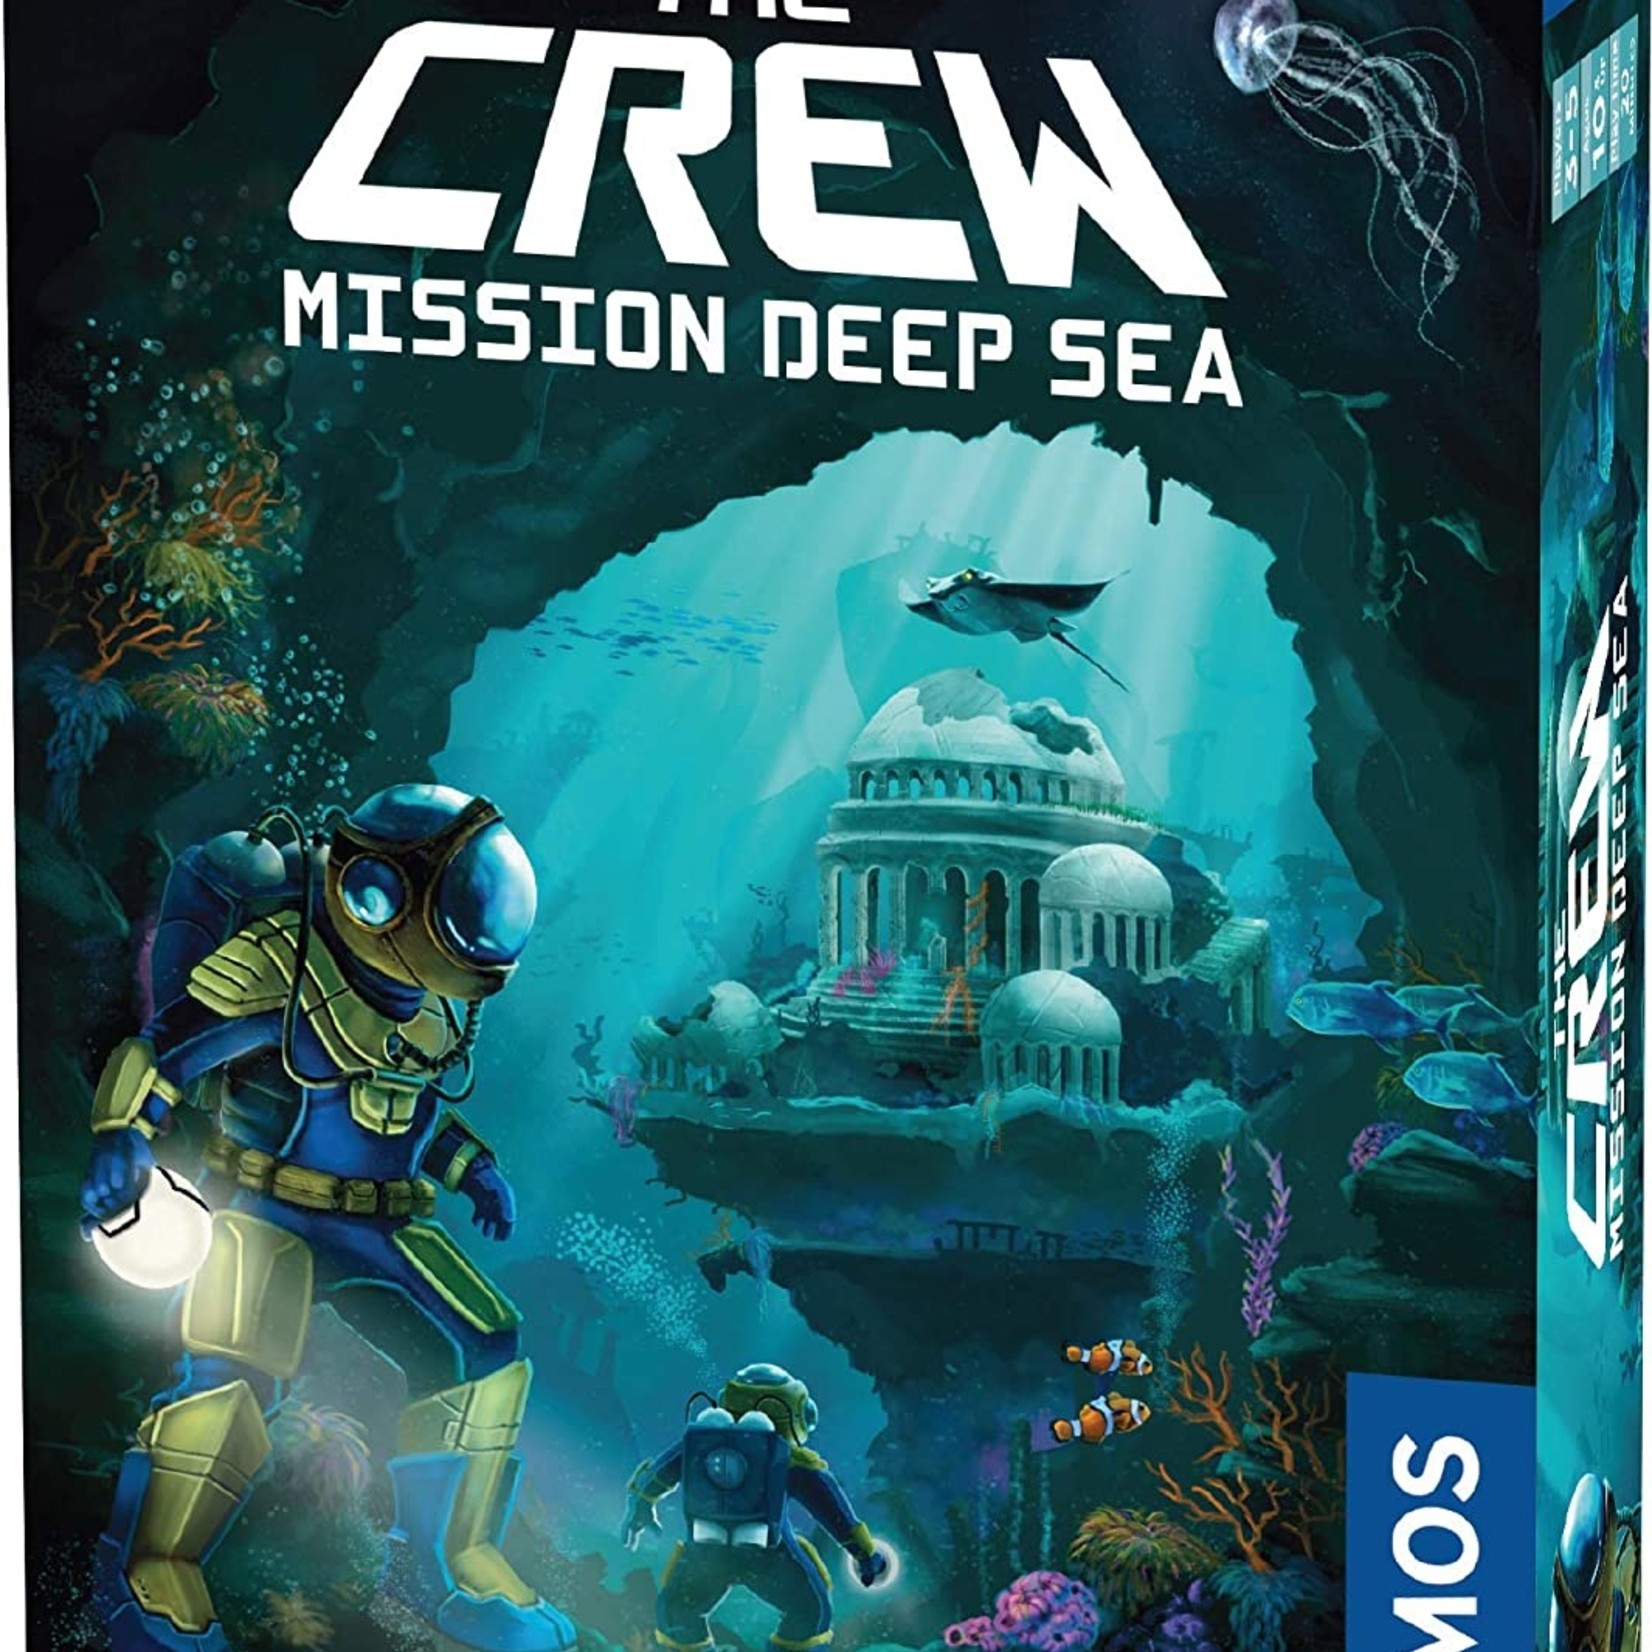 Thames Kosmos The Crew: Mission Deep Sea